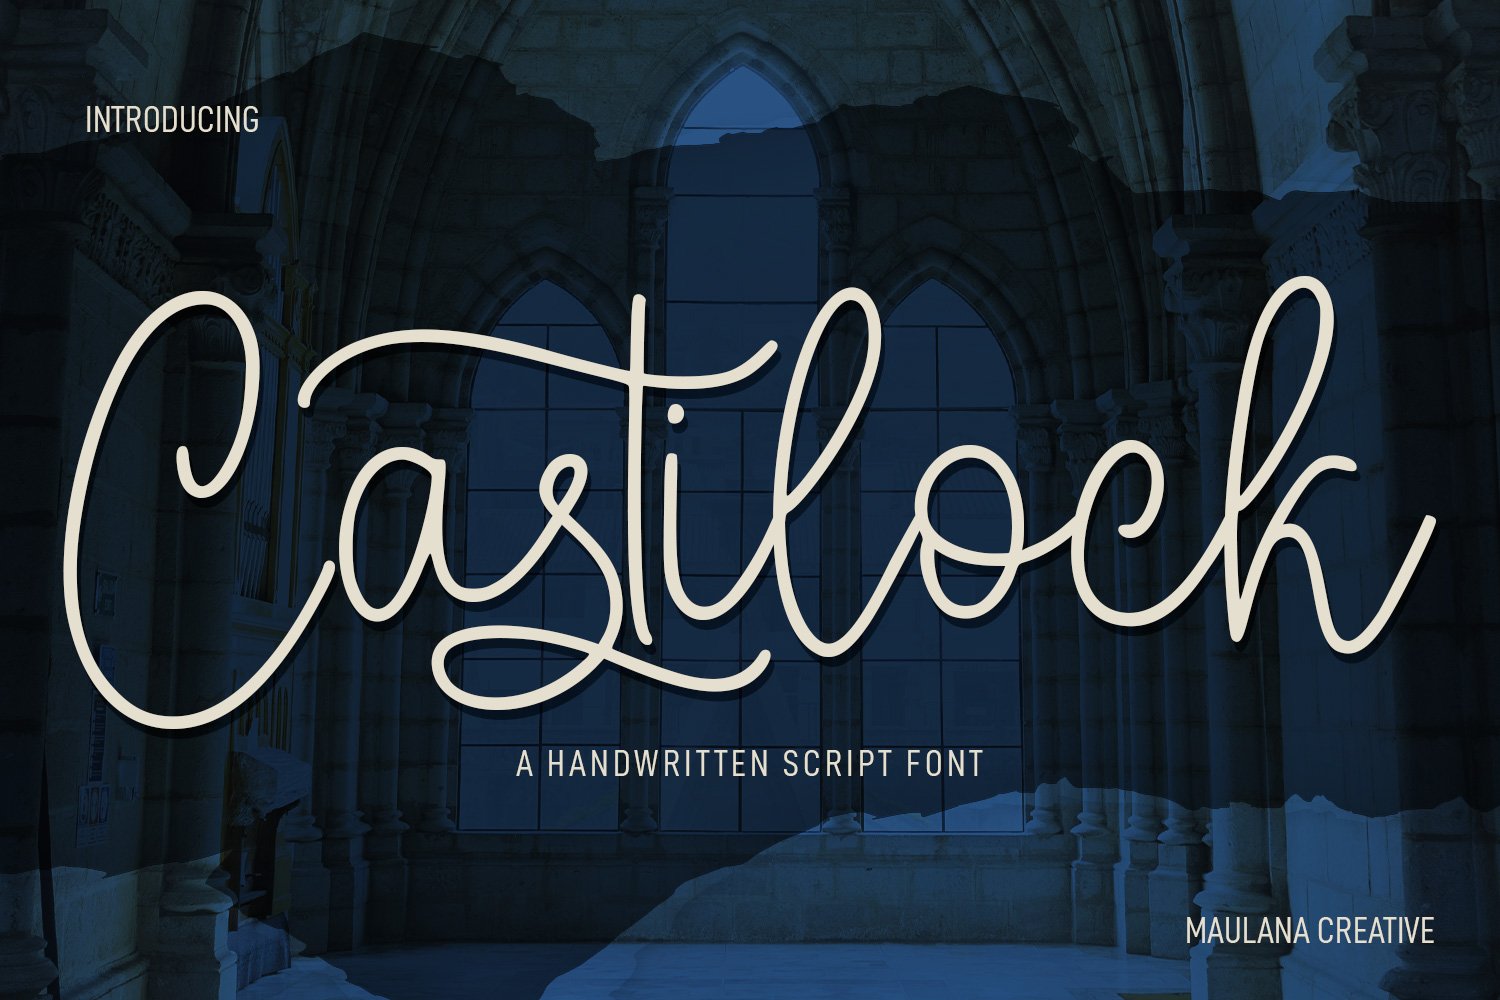 Castilock Script Font cover image.